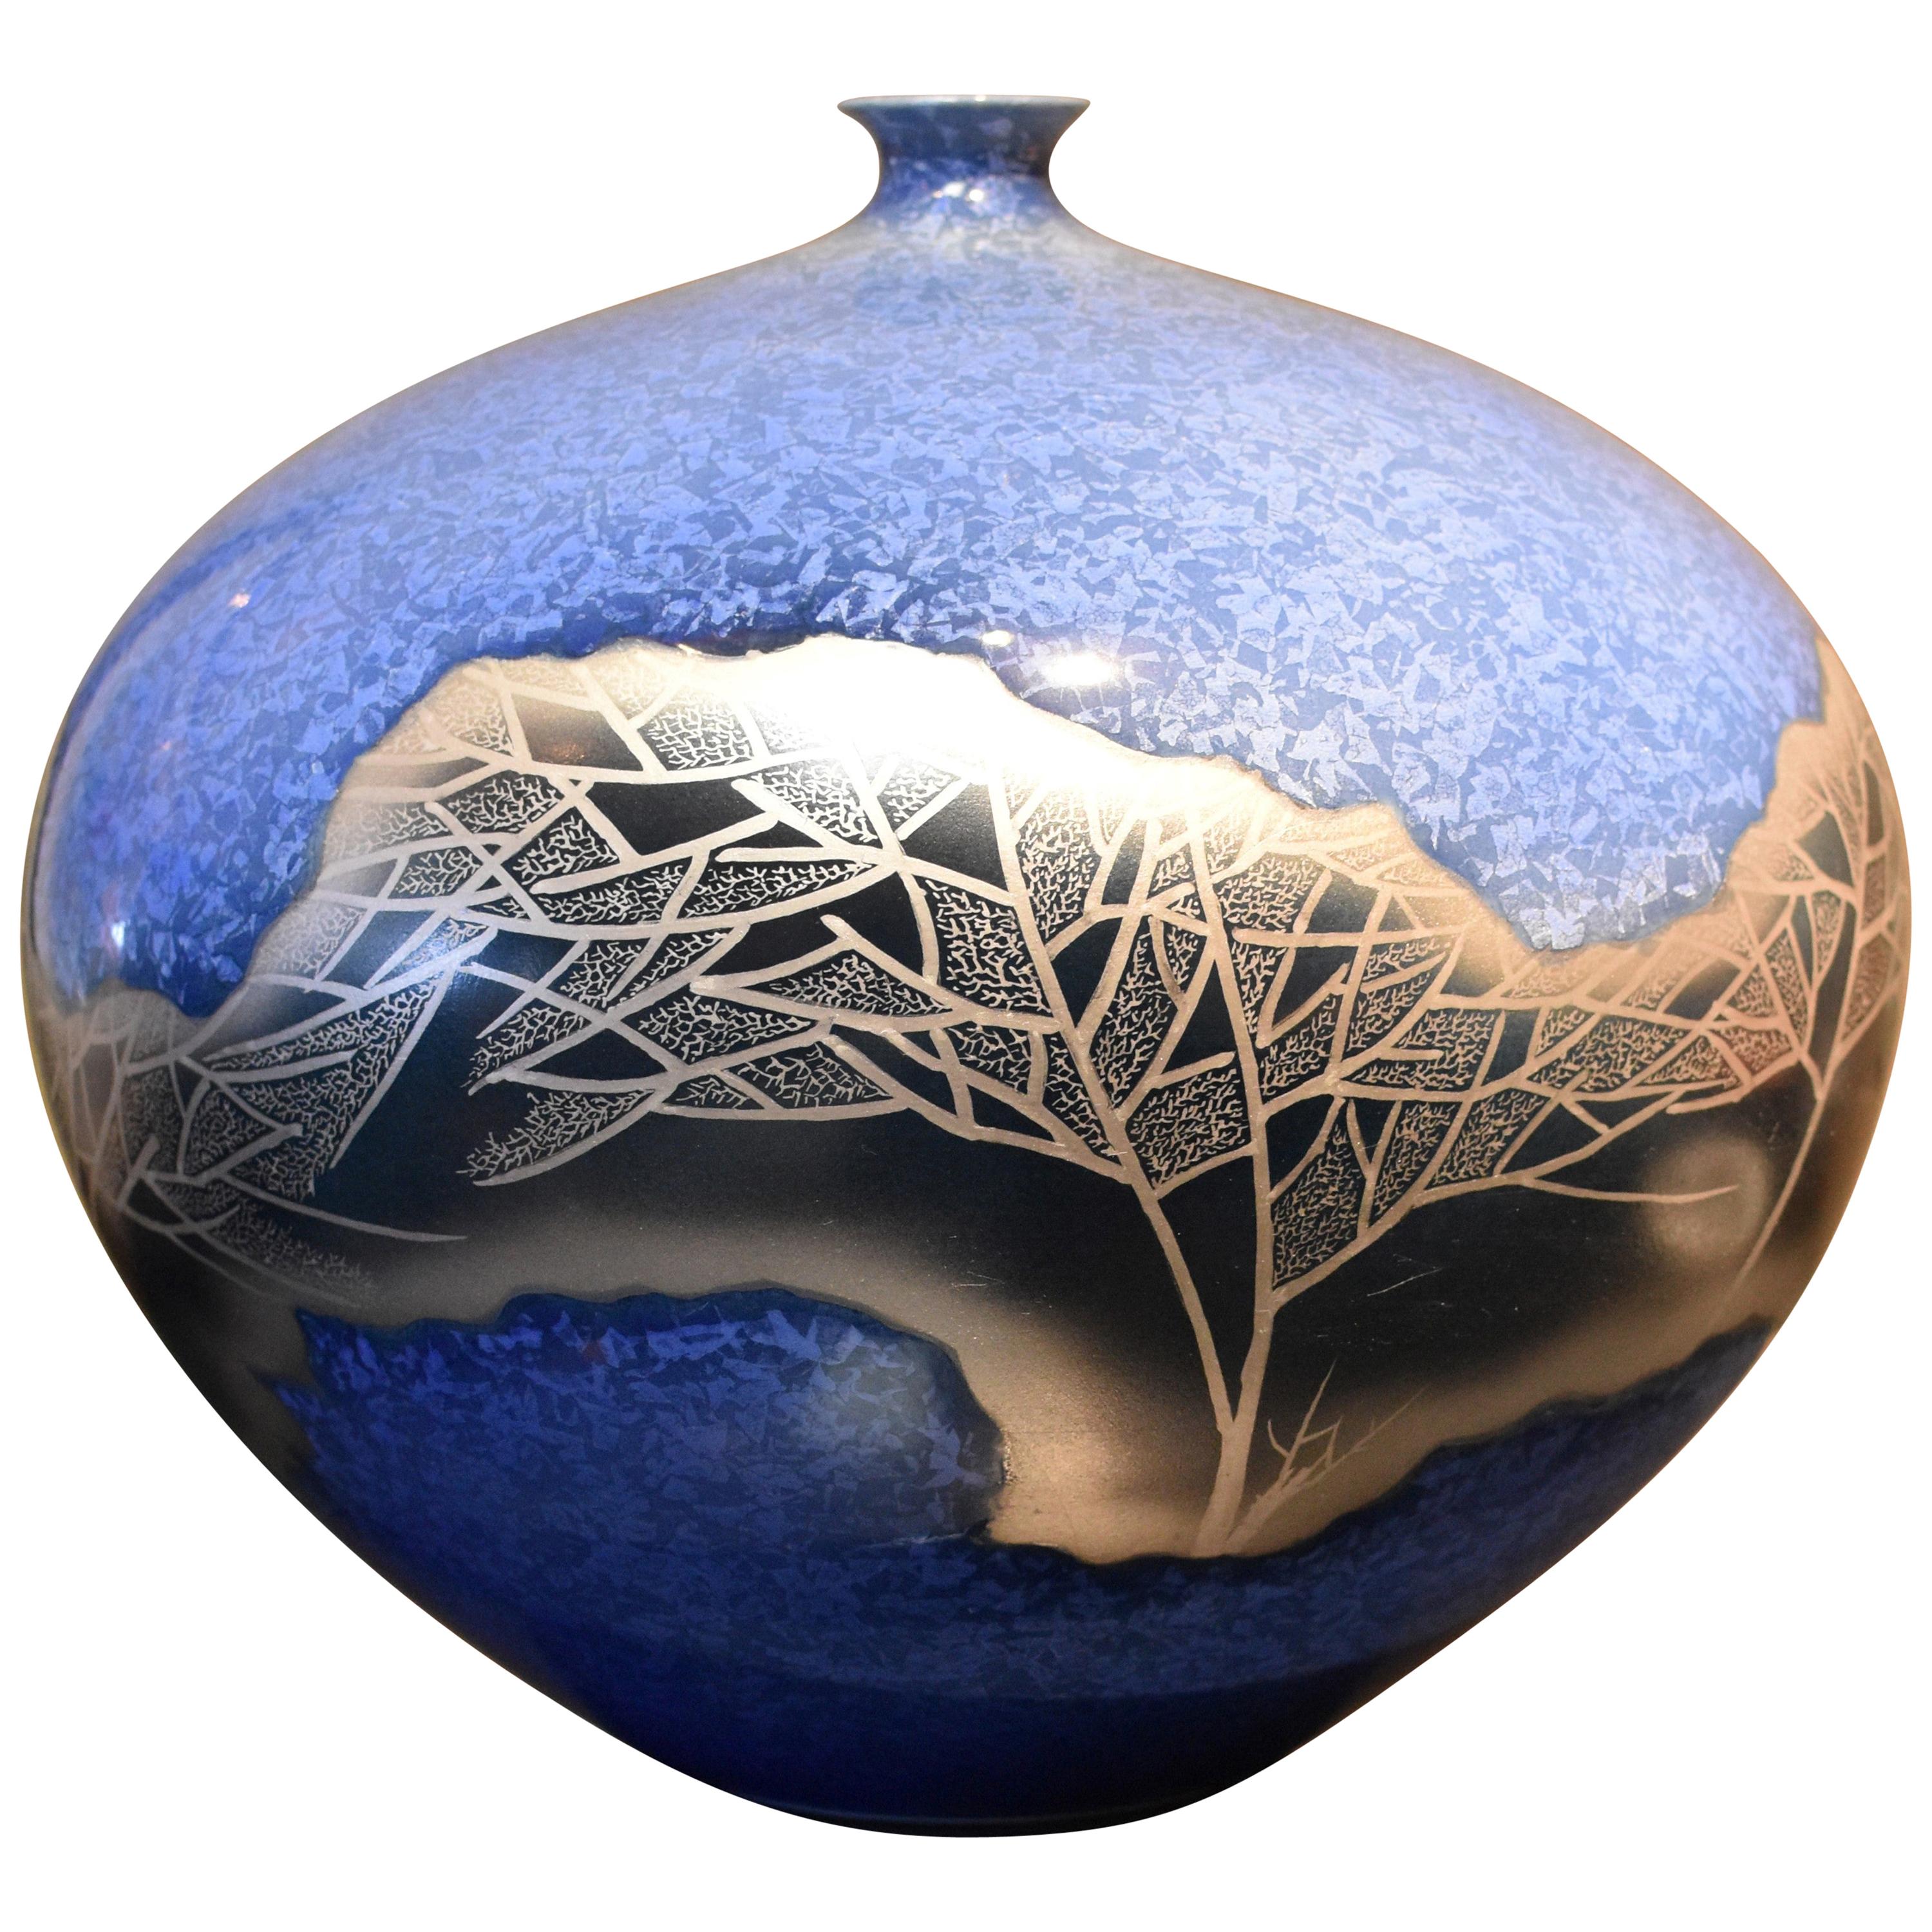 Japanese Porcelain Vase in Blue Platinum by Contemporary Master Artist